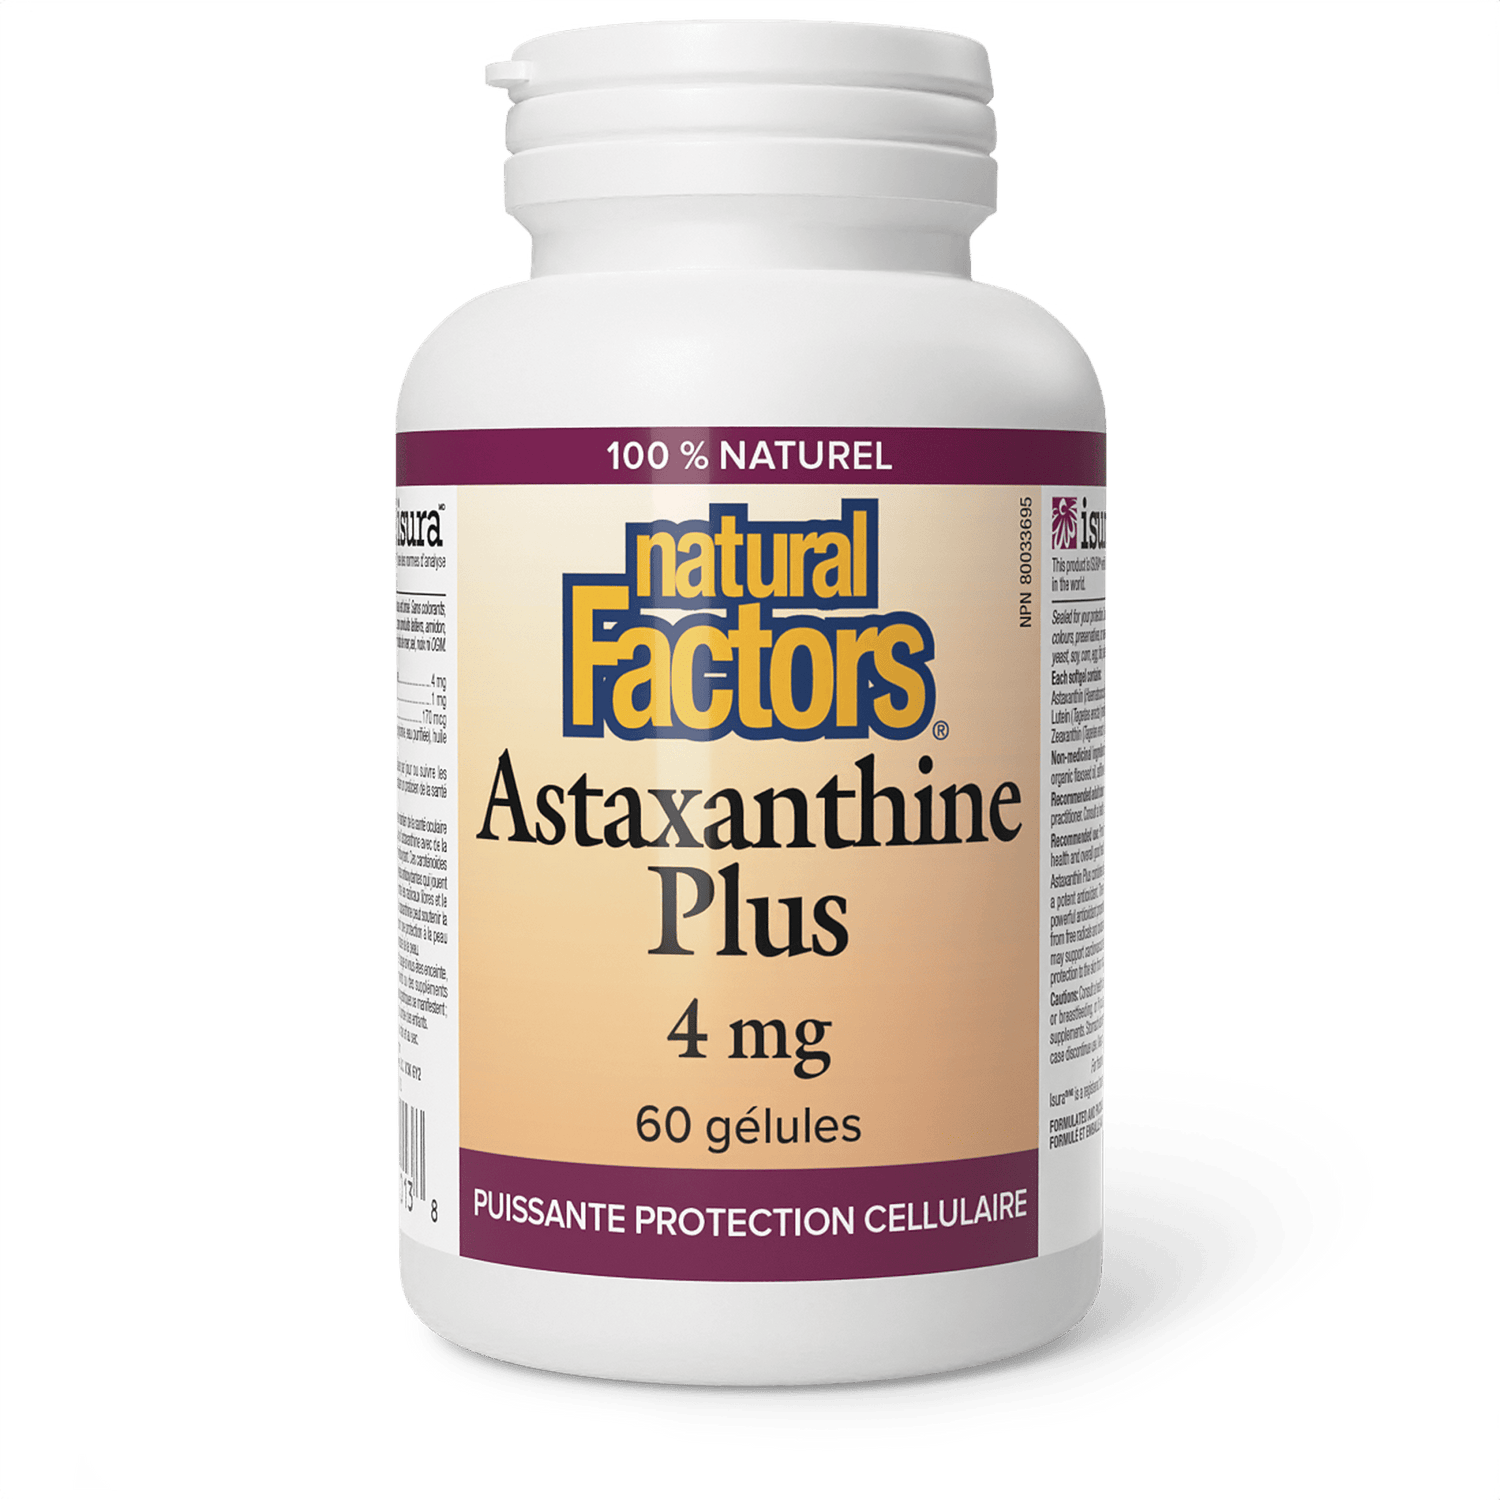 Astaxanthine Plus 4 mg, Natural Factors|v|image|1013